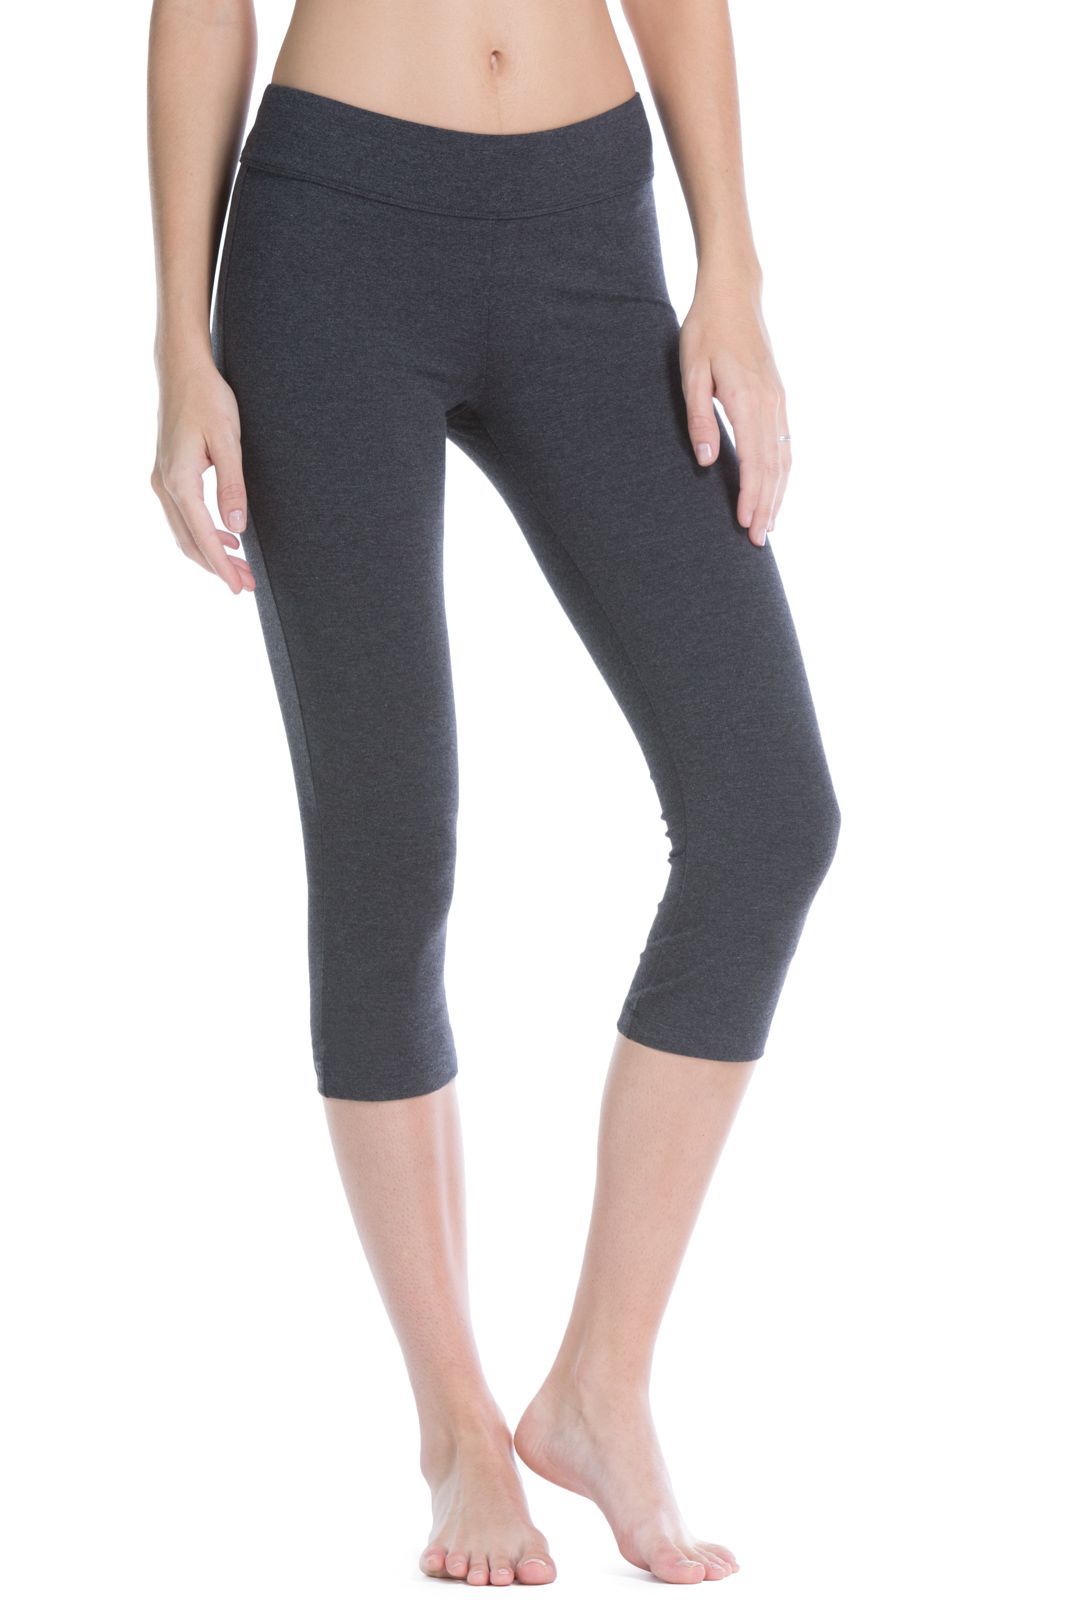 Premium Cotton Capri Length Leggings Yoga Pants Stretchy Basic Everyday